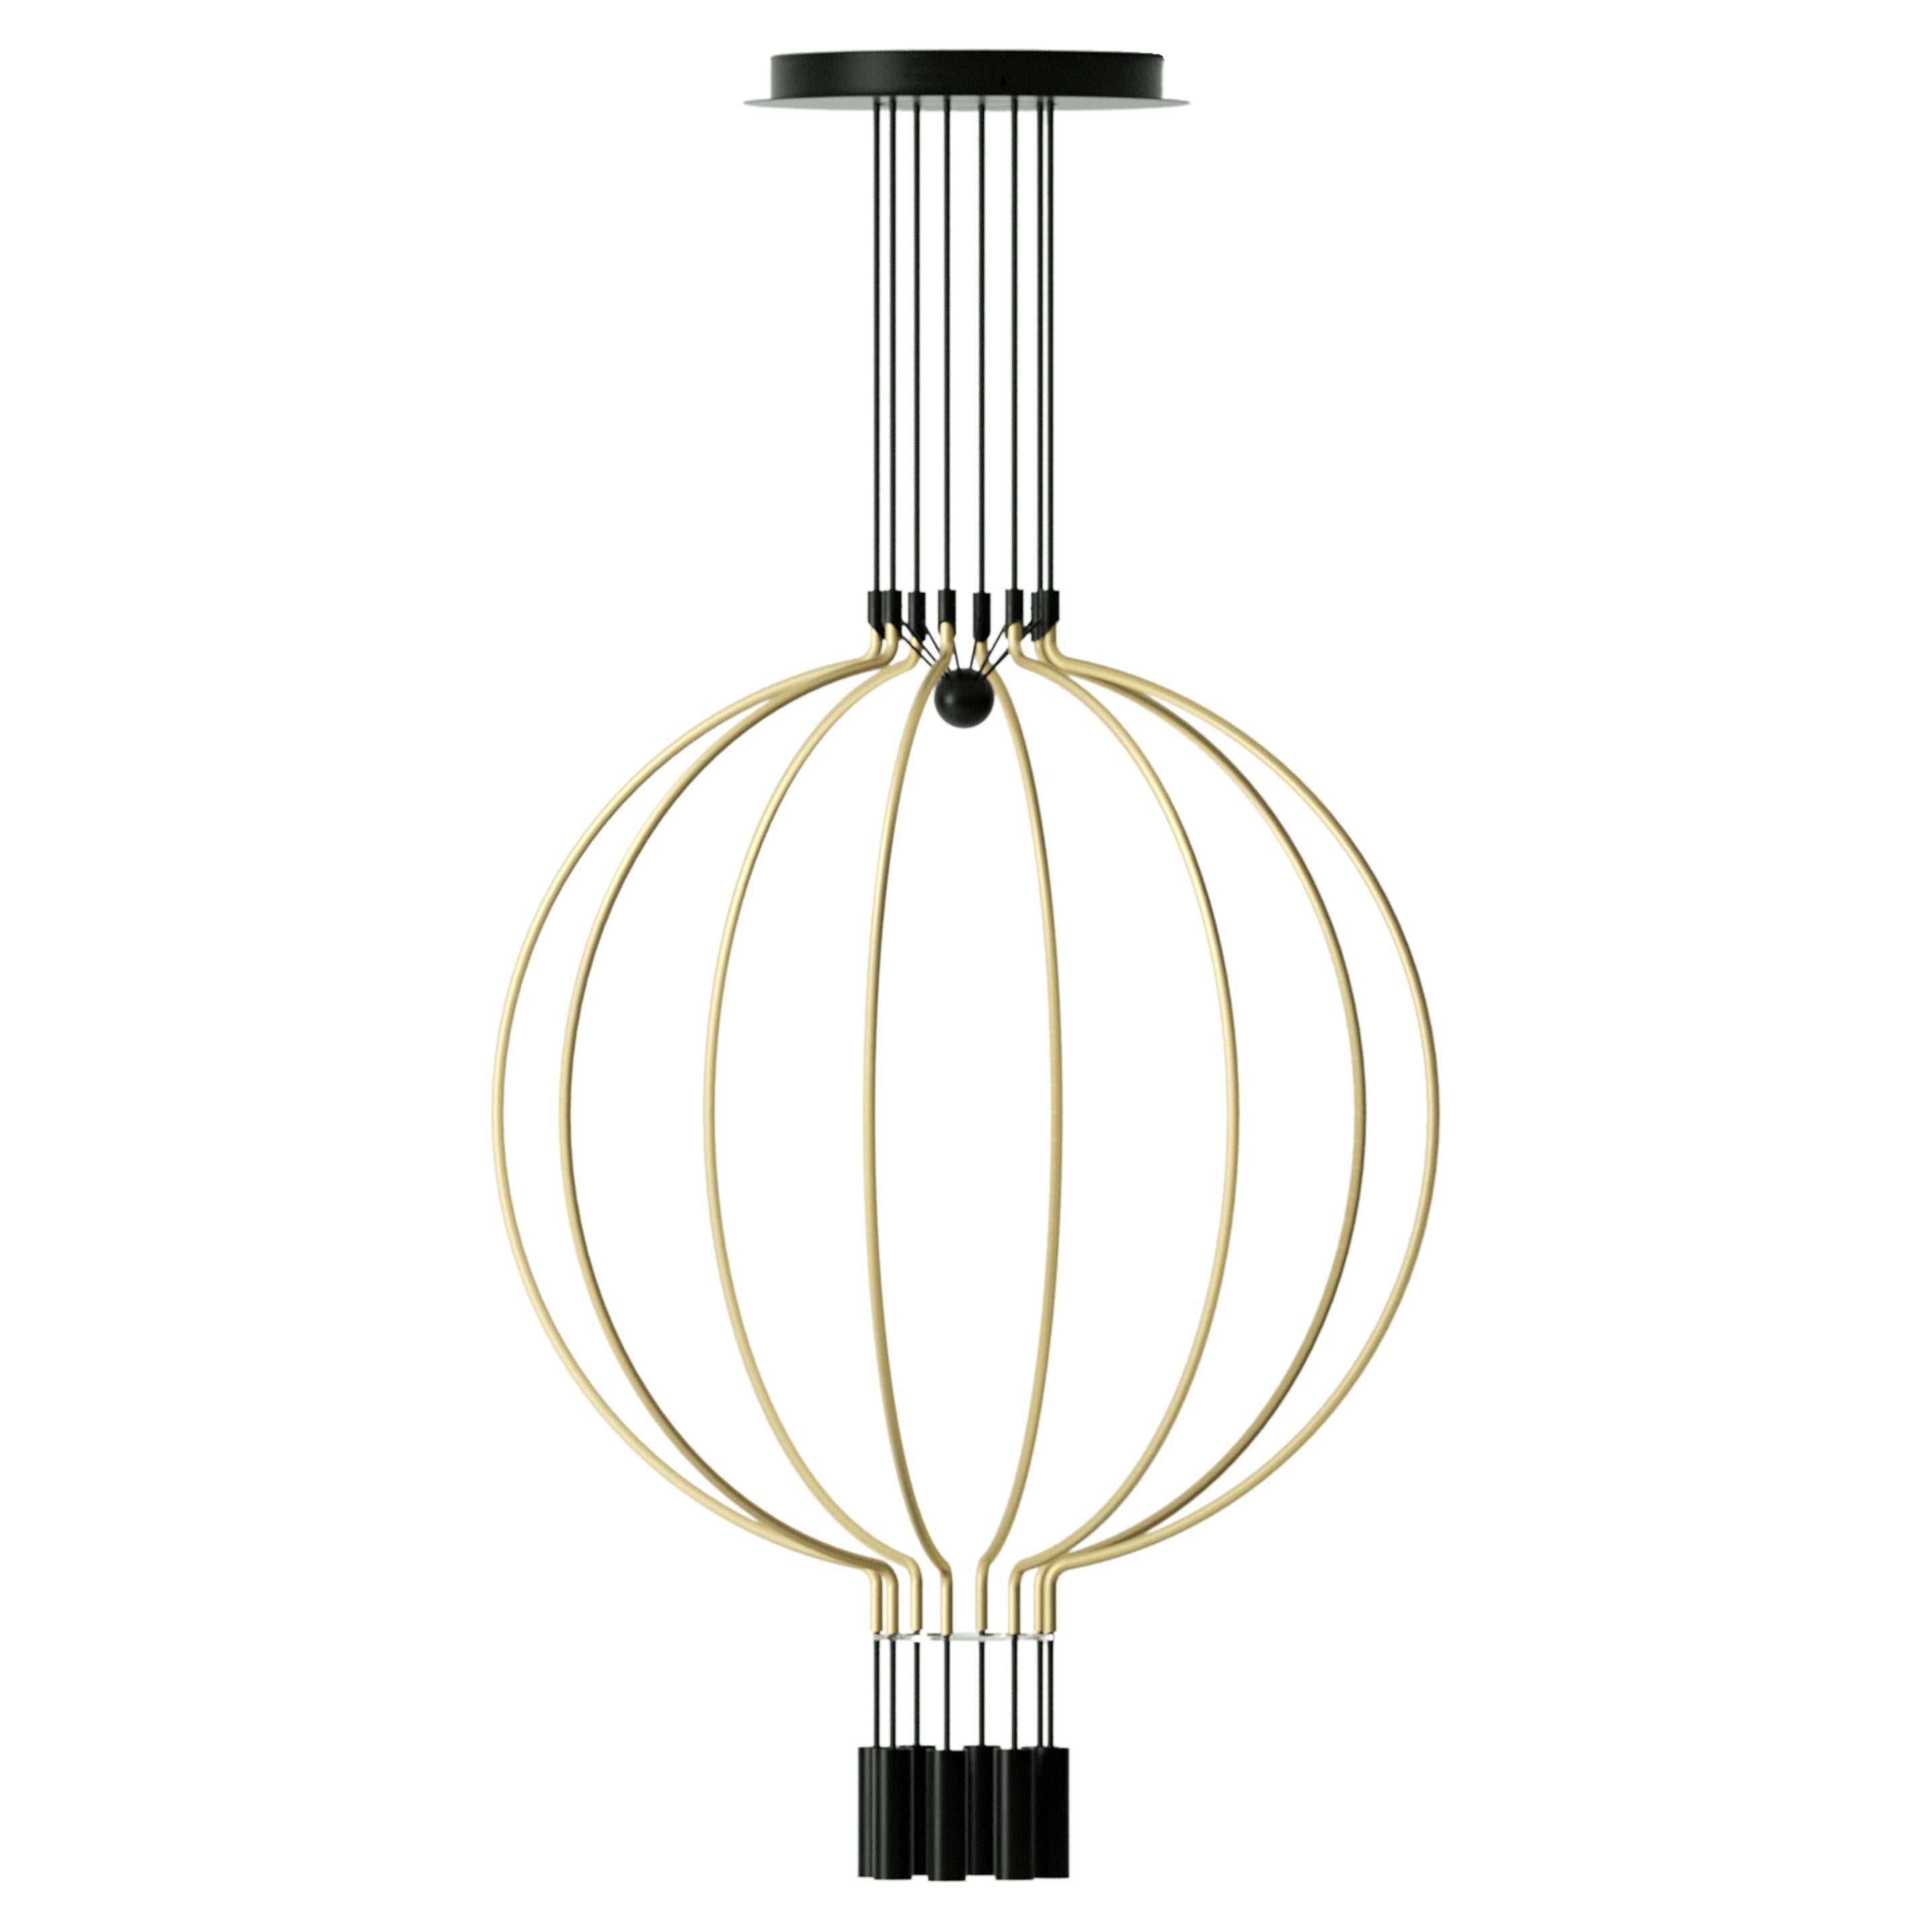 Axolight Liaison Model M8 Pendant Lamp in Gold/Black by Sara Moroni For Sale